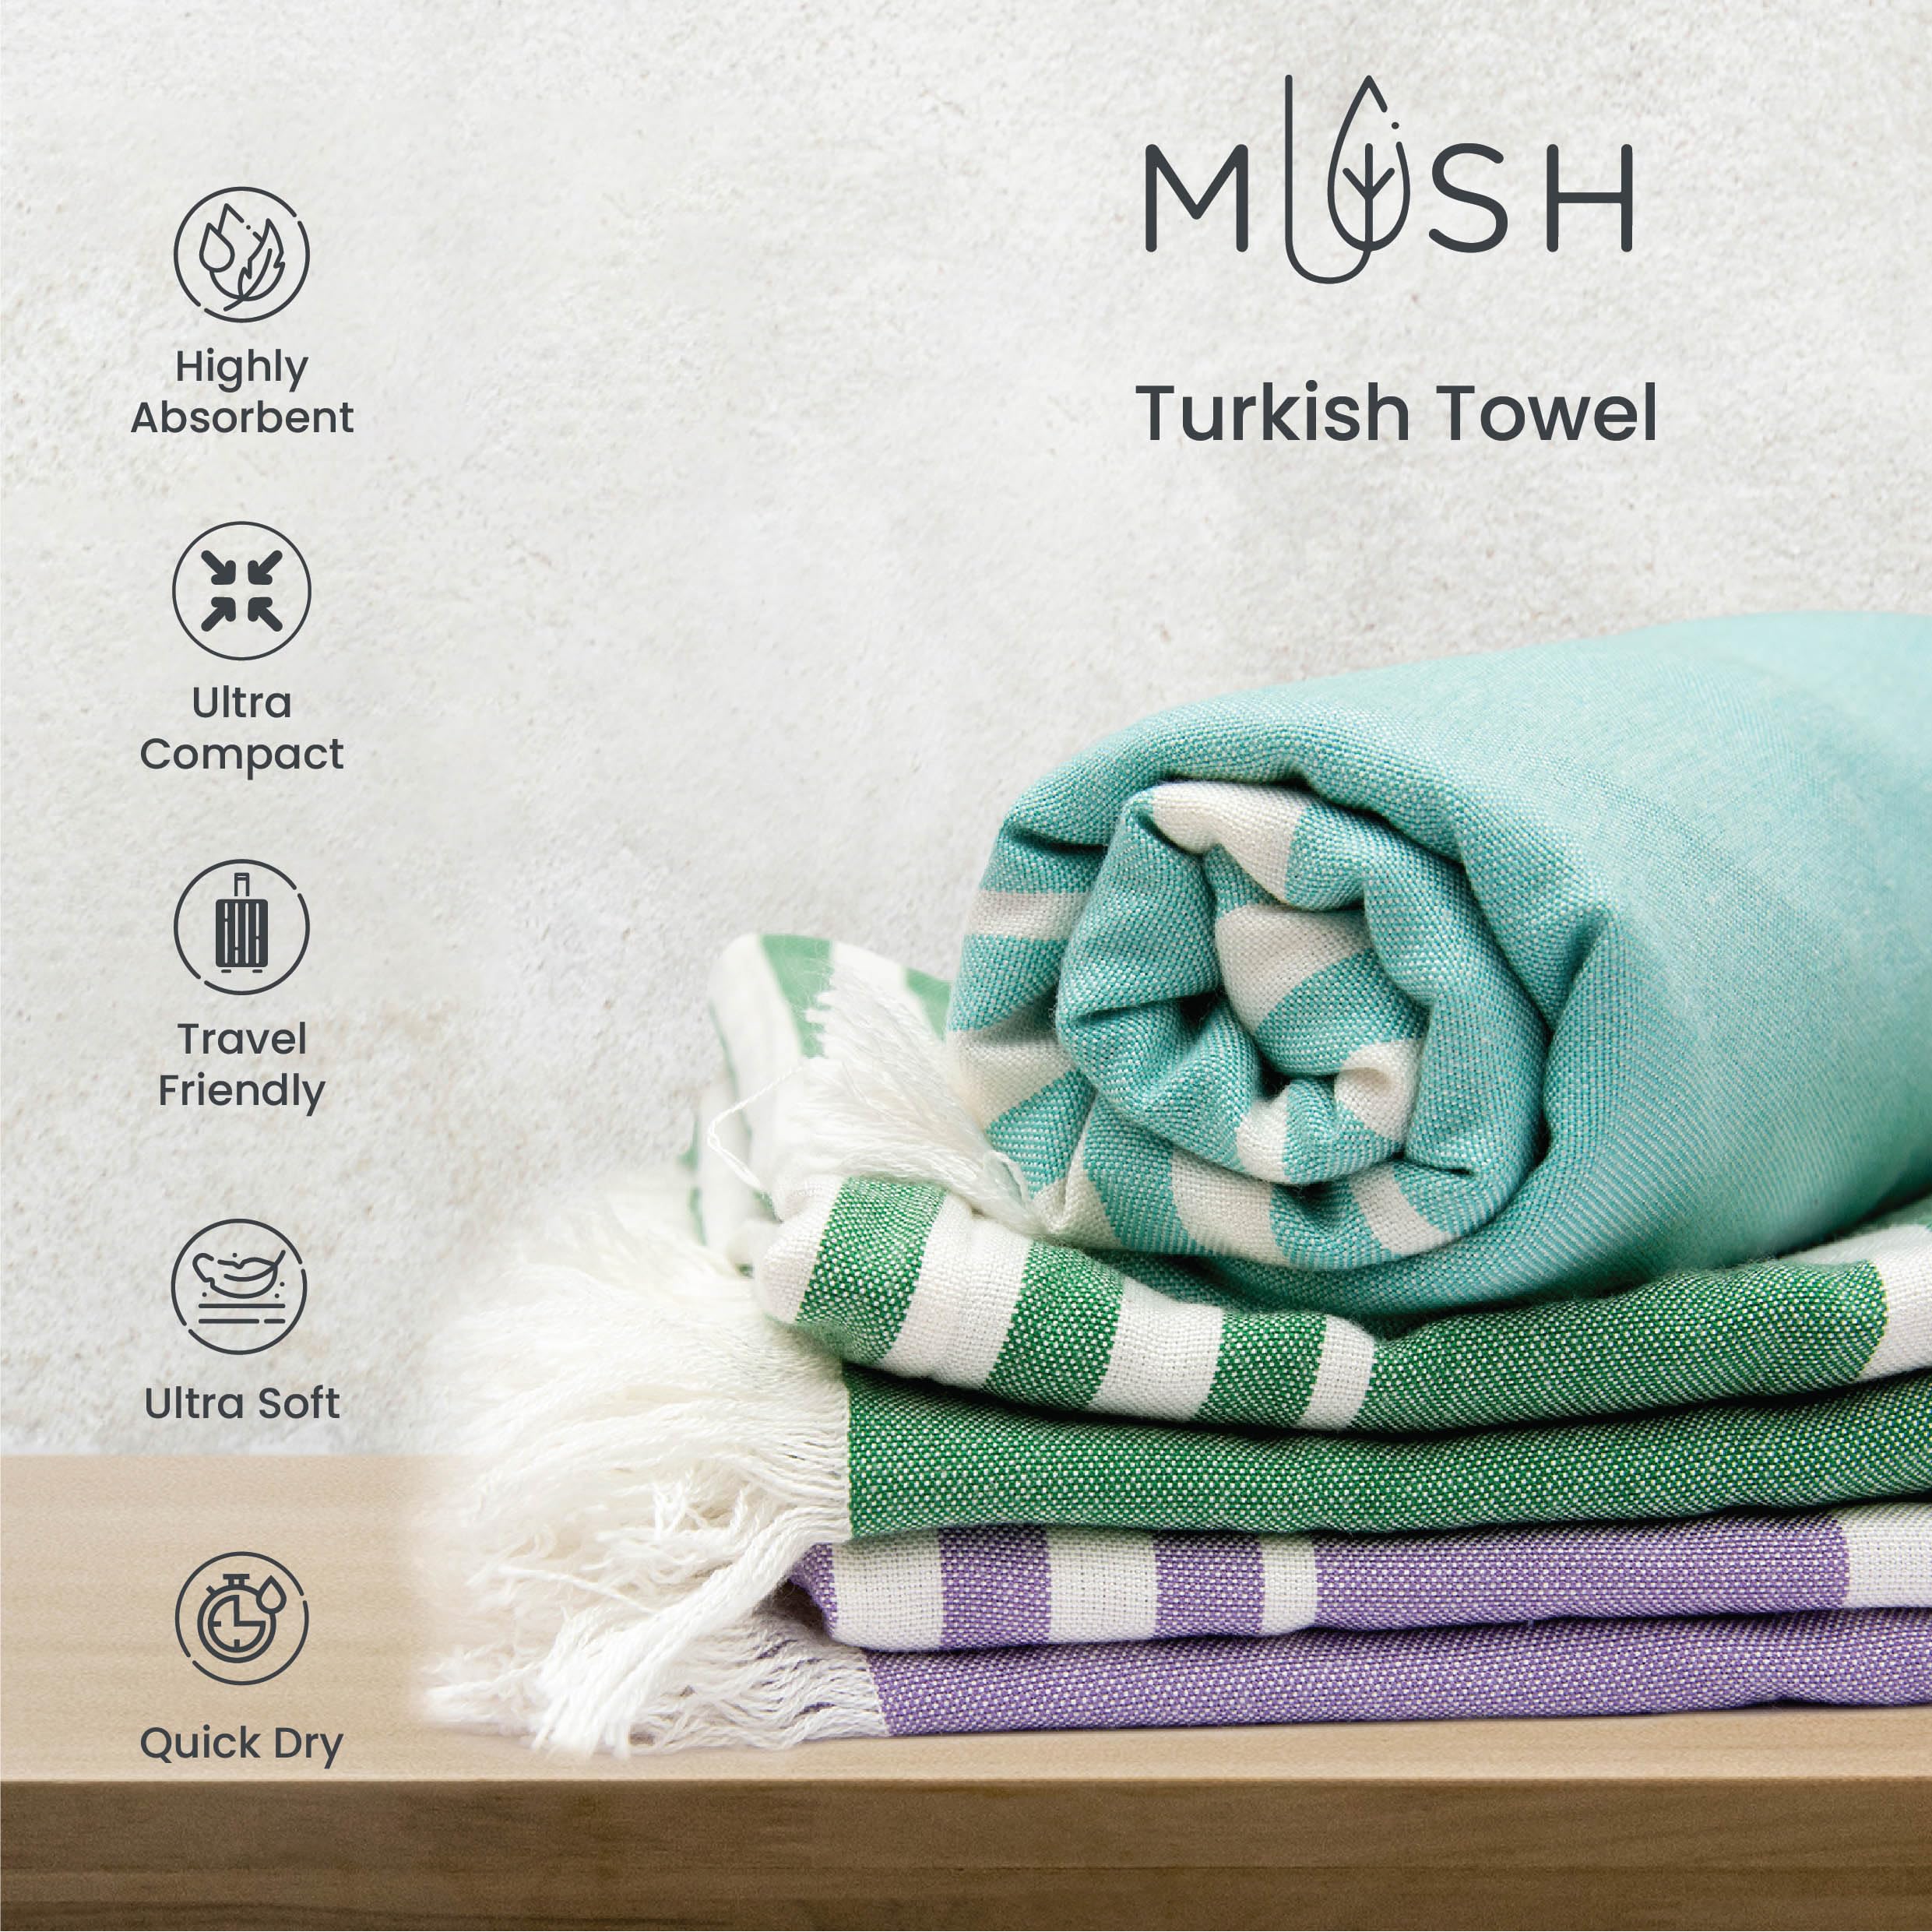 Mush Bamboo Turkish Towel Set: Perfect Diwali, Wedding, Housewarming, Anniversary Gifts for Women, Men, Couples. Soft, Absorbent, Compact, Quick Dry Towel for Bath, Travel, Gym, Beach, Pool, Yoga (2, Gift Box : Lavender - Dark Green)